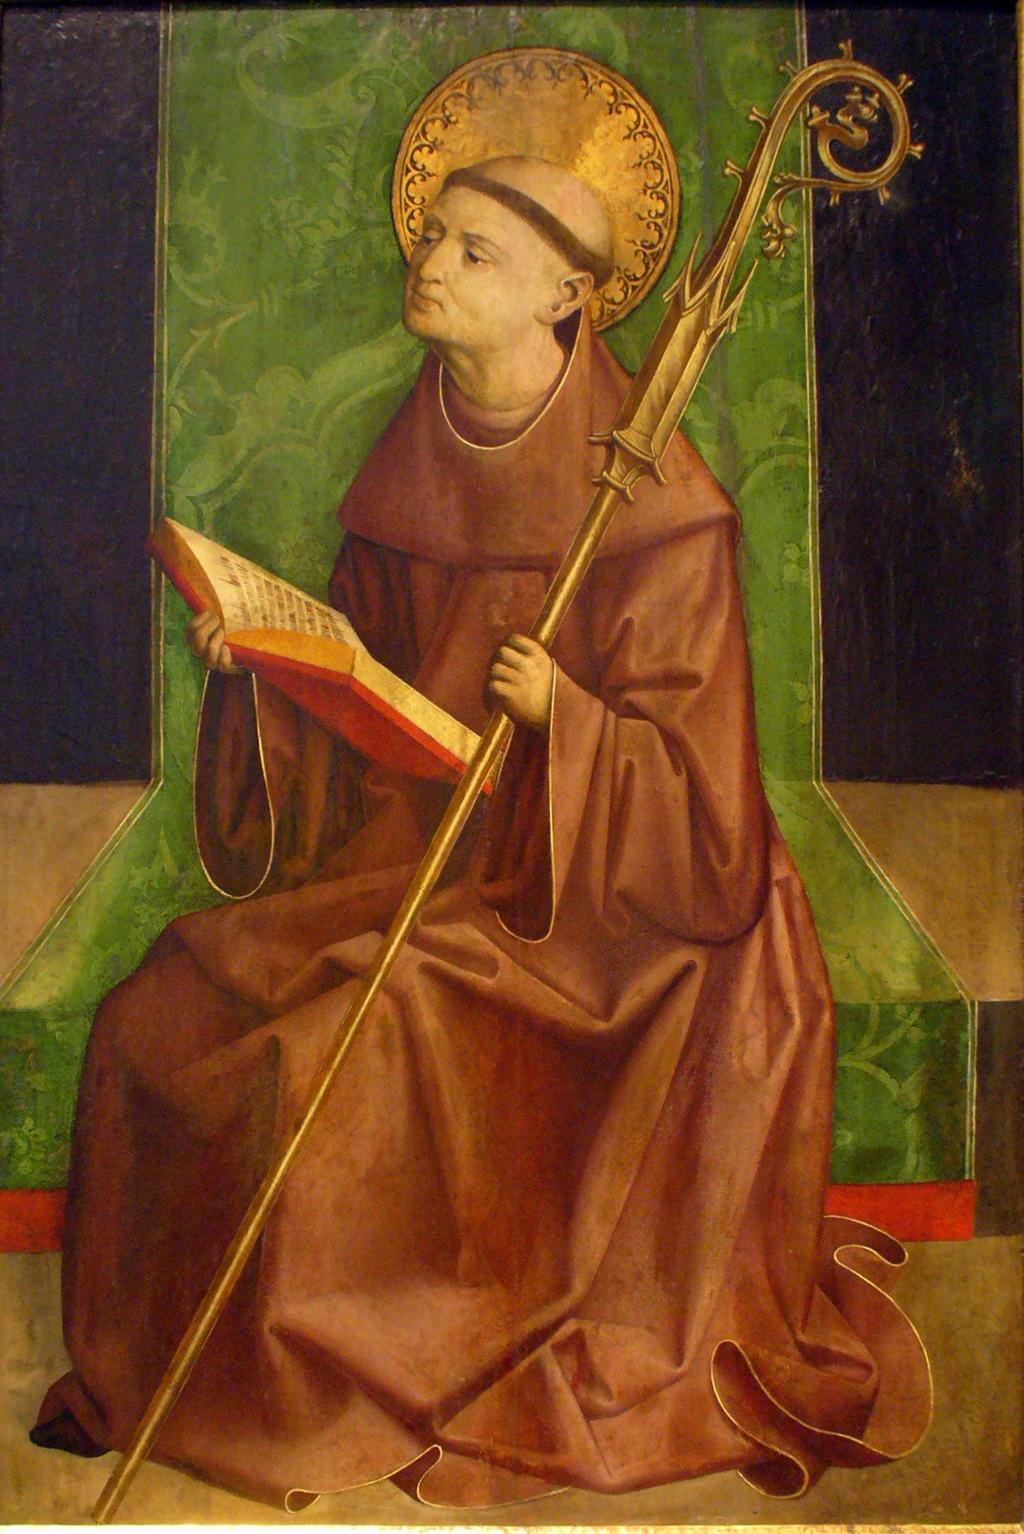 Abb.183 Heiliger Benedikt, um 1500, Regensburg/Histor.